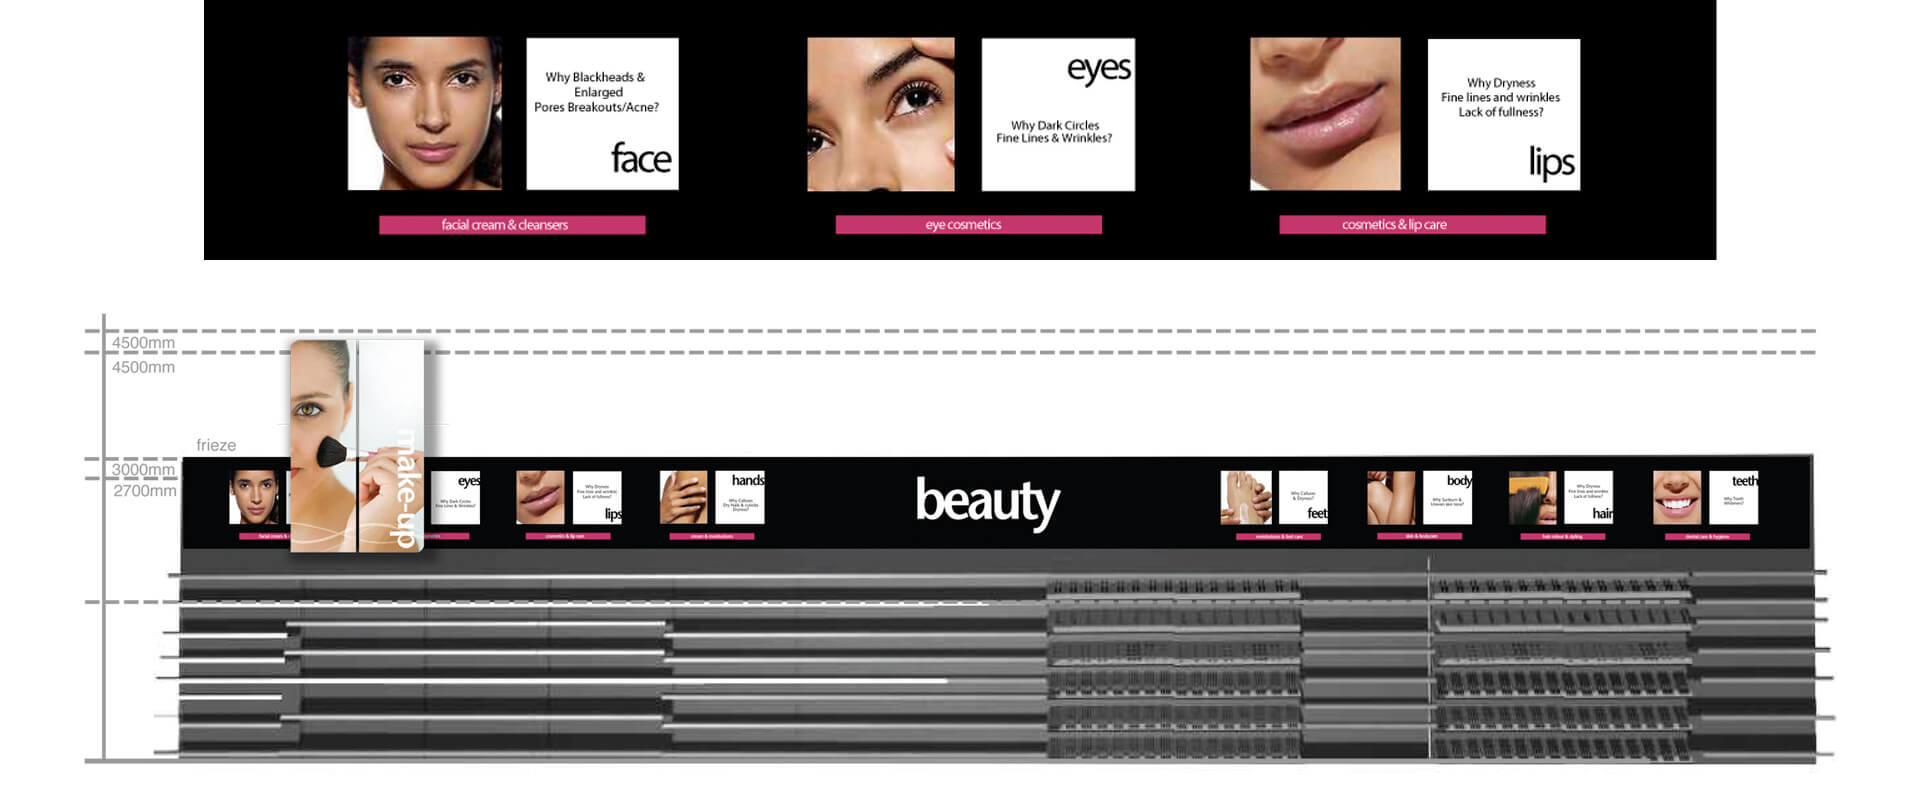 Asda health and beauty branding concept